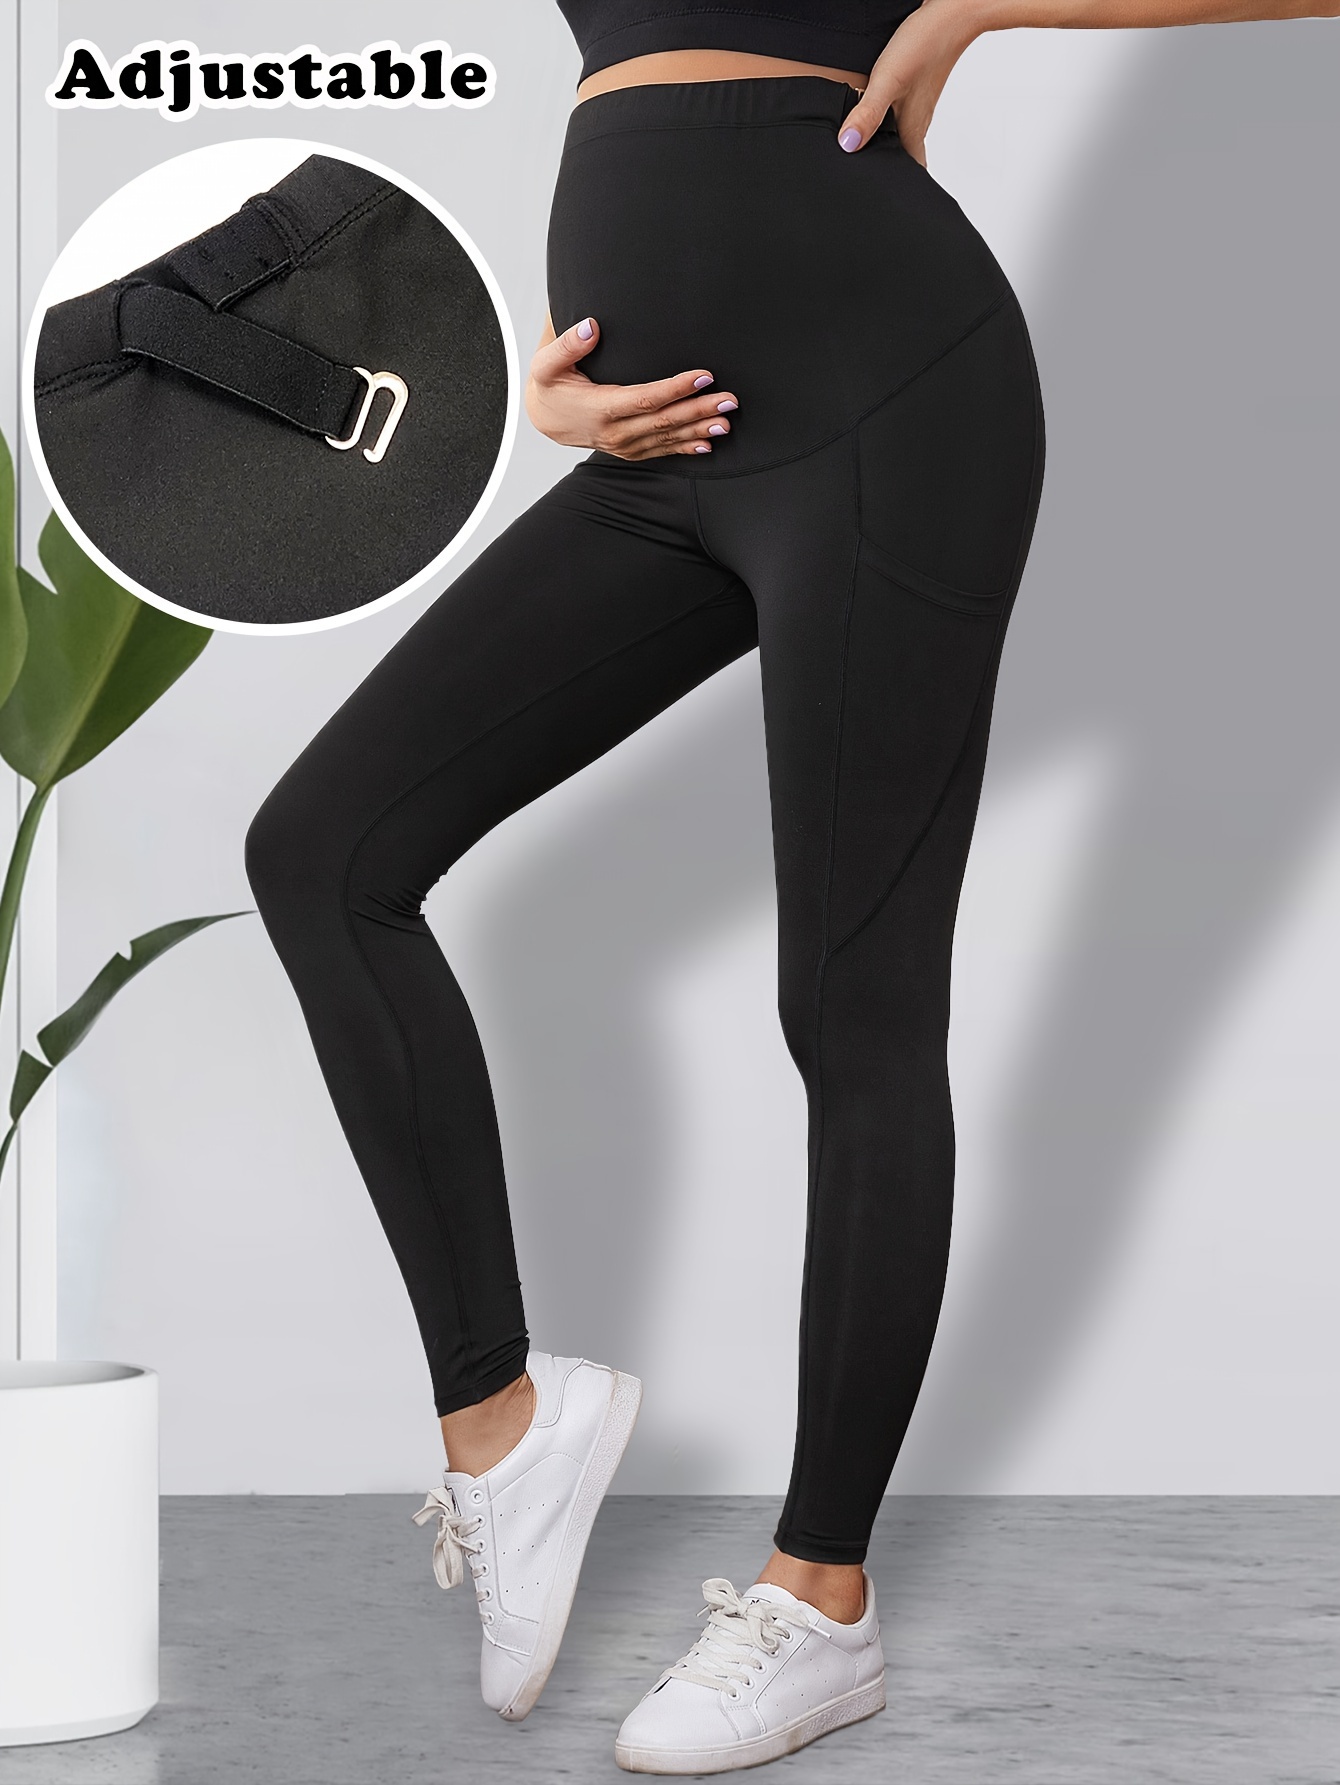 Pregnant Women's Pants High Waist Comfy Fitness Yogo Maternity Leggings